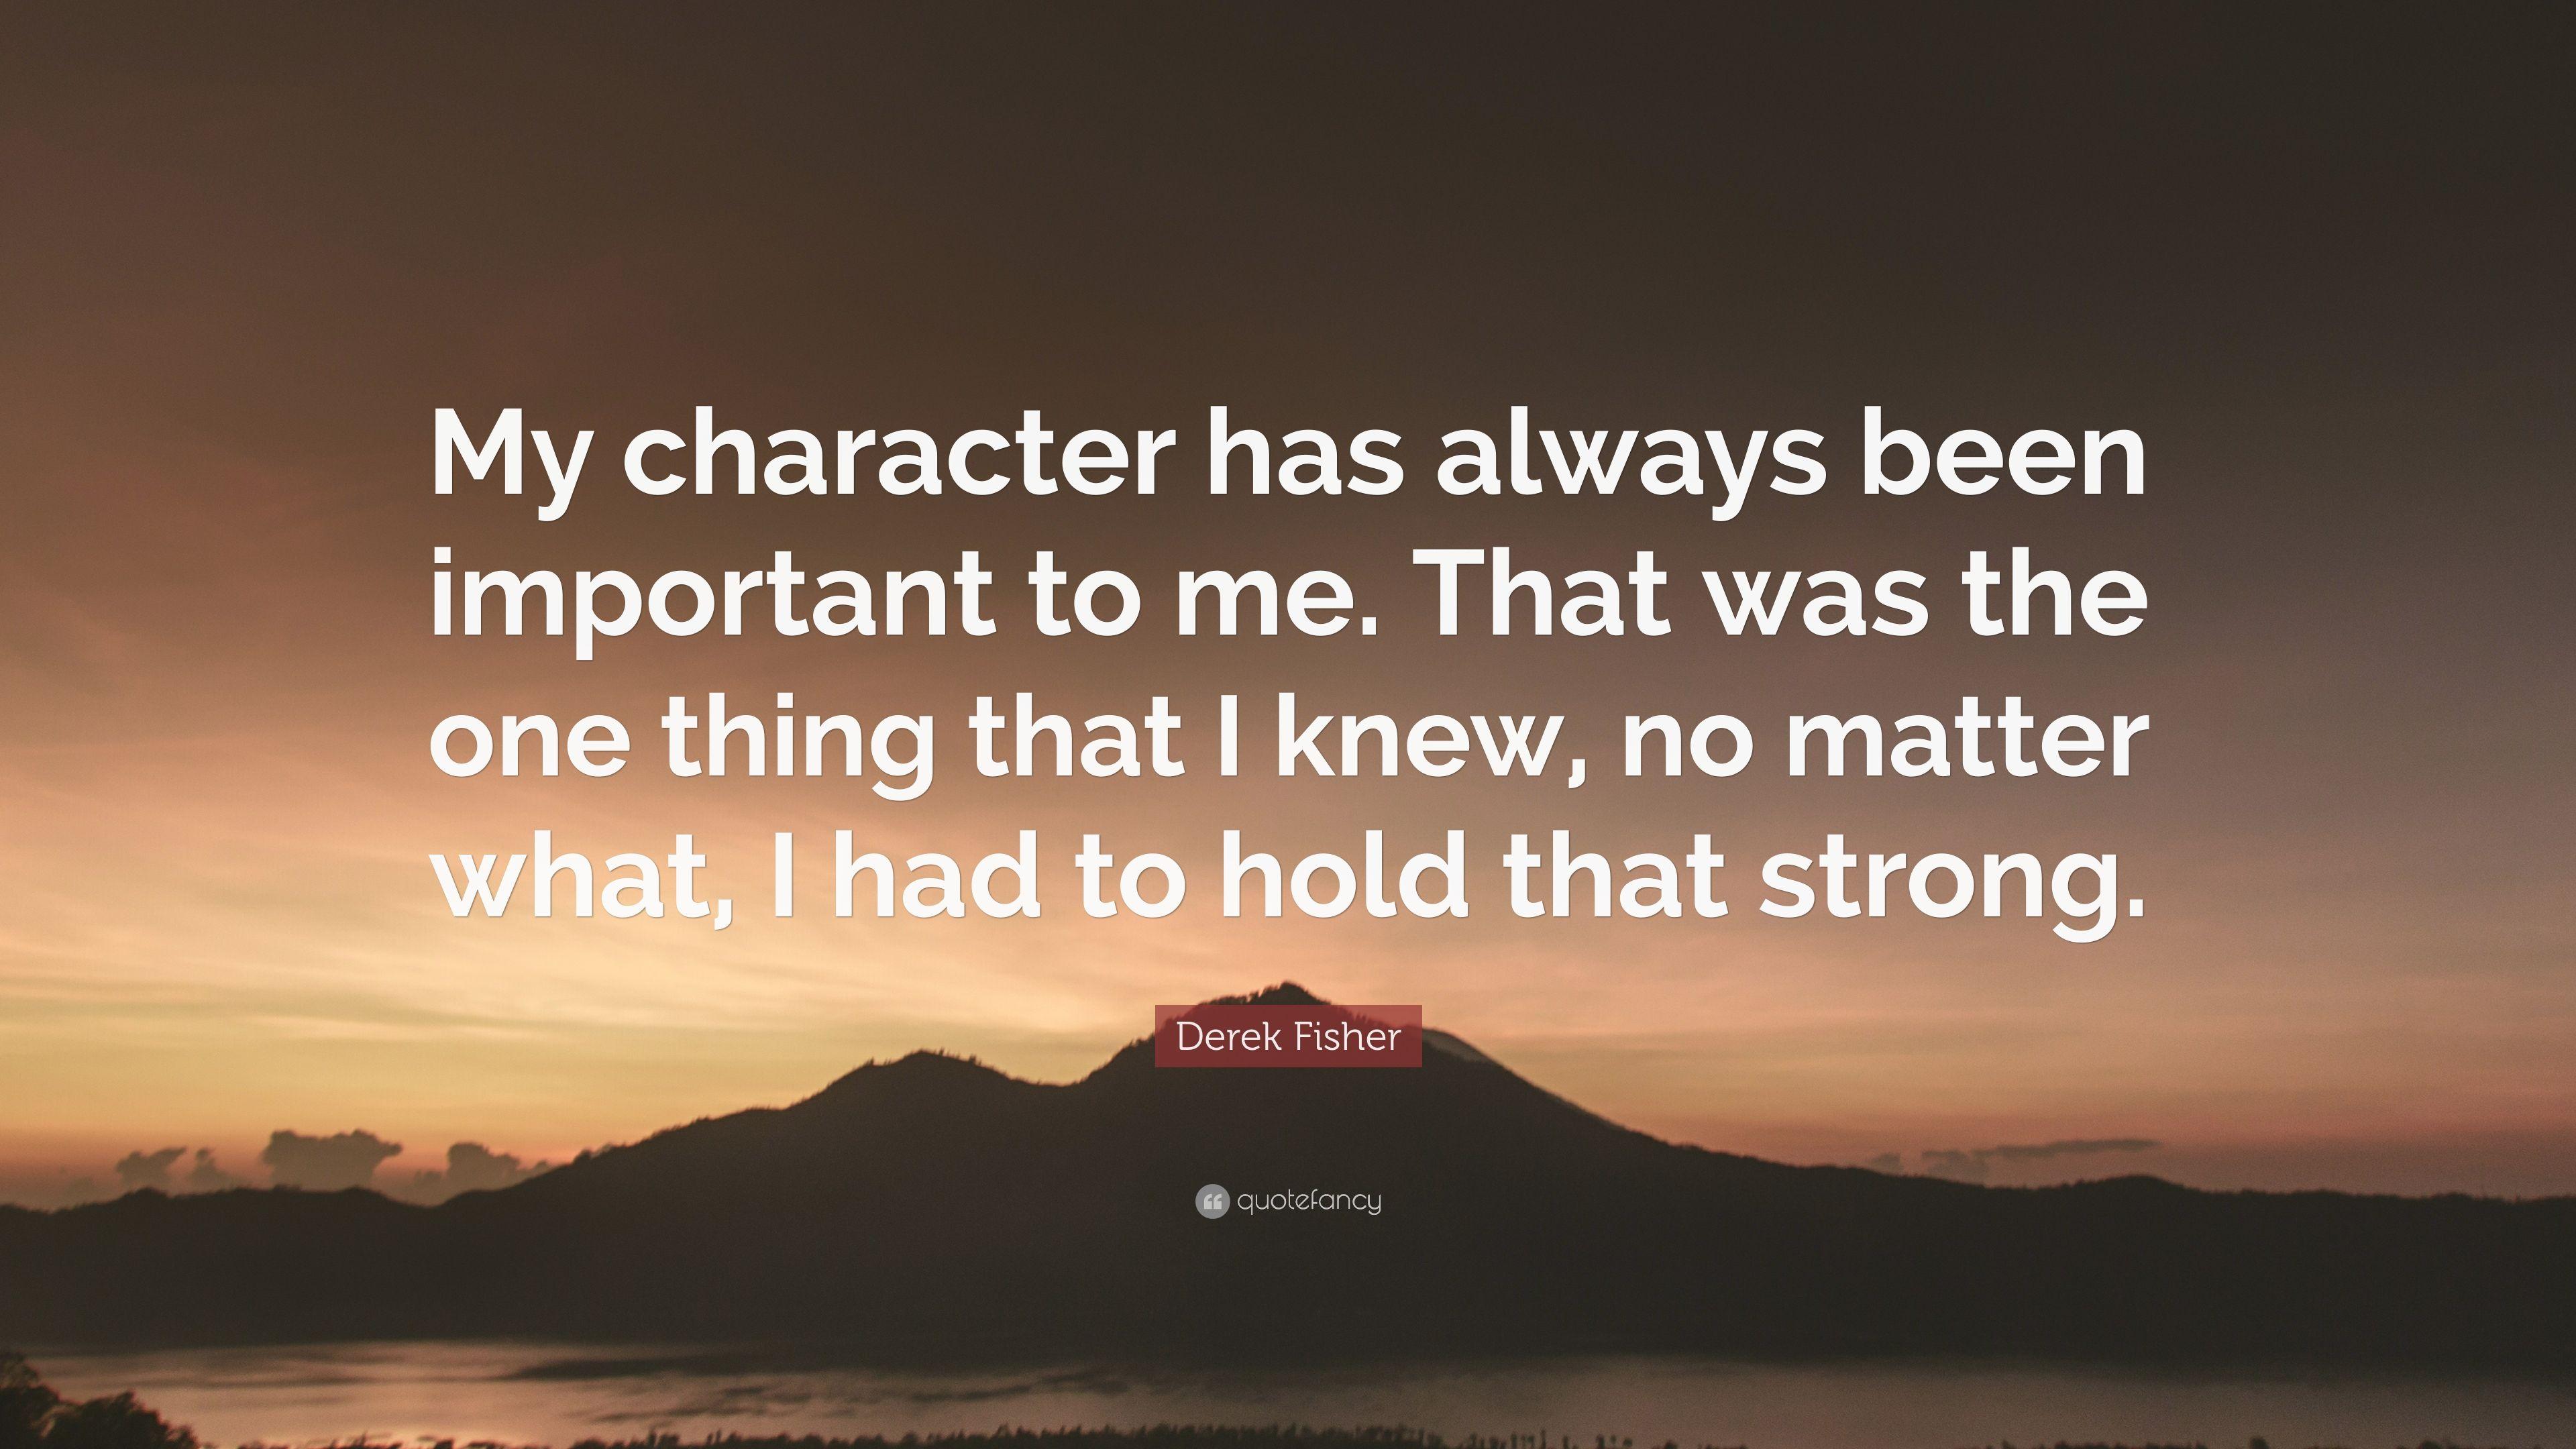 Derek Fisher Quote: “My character has always been important to me